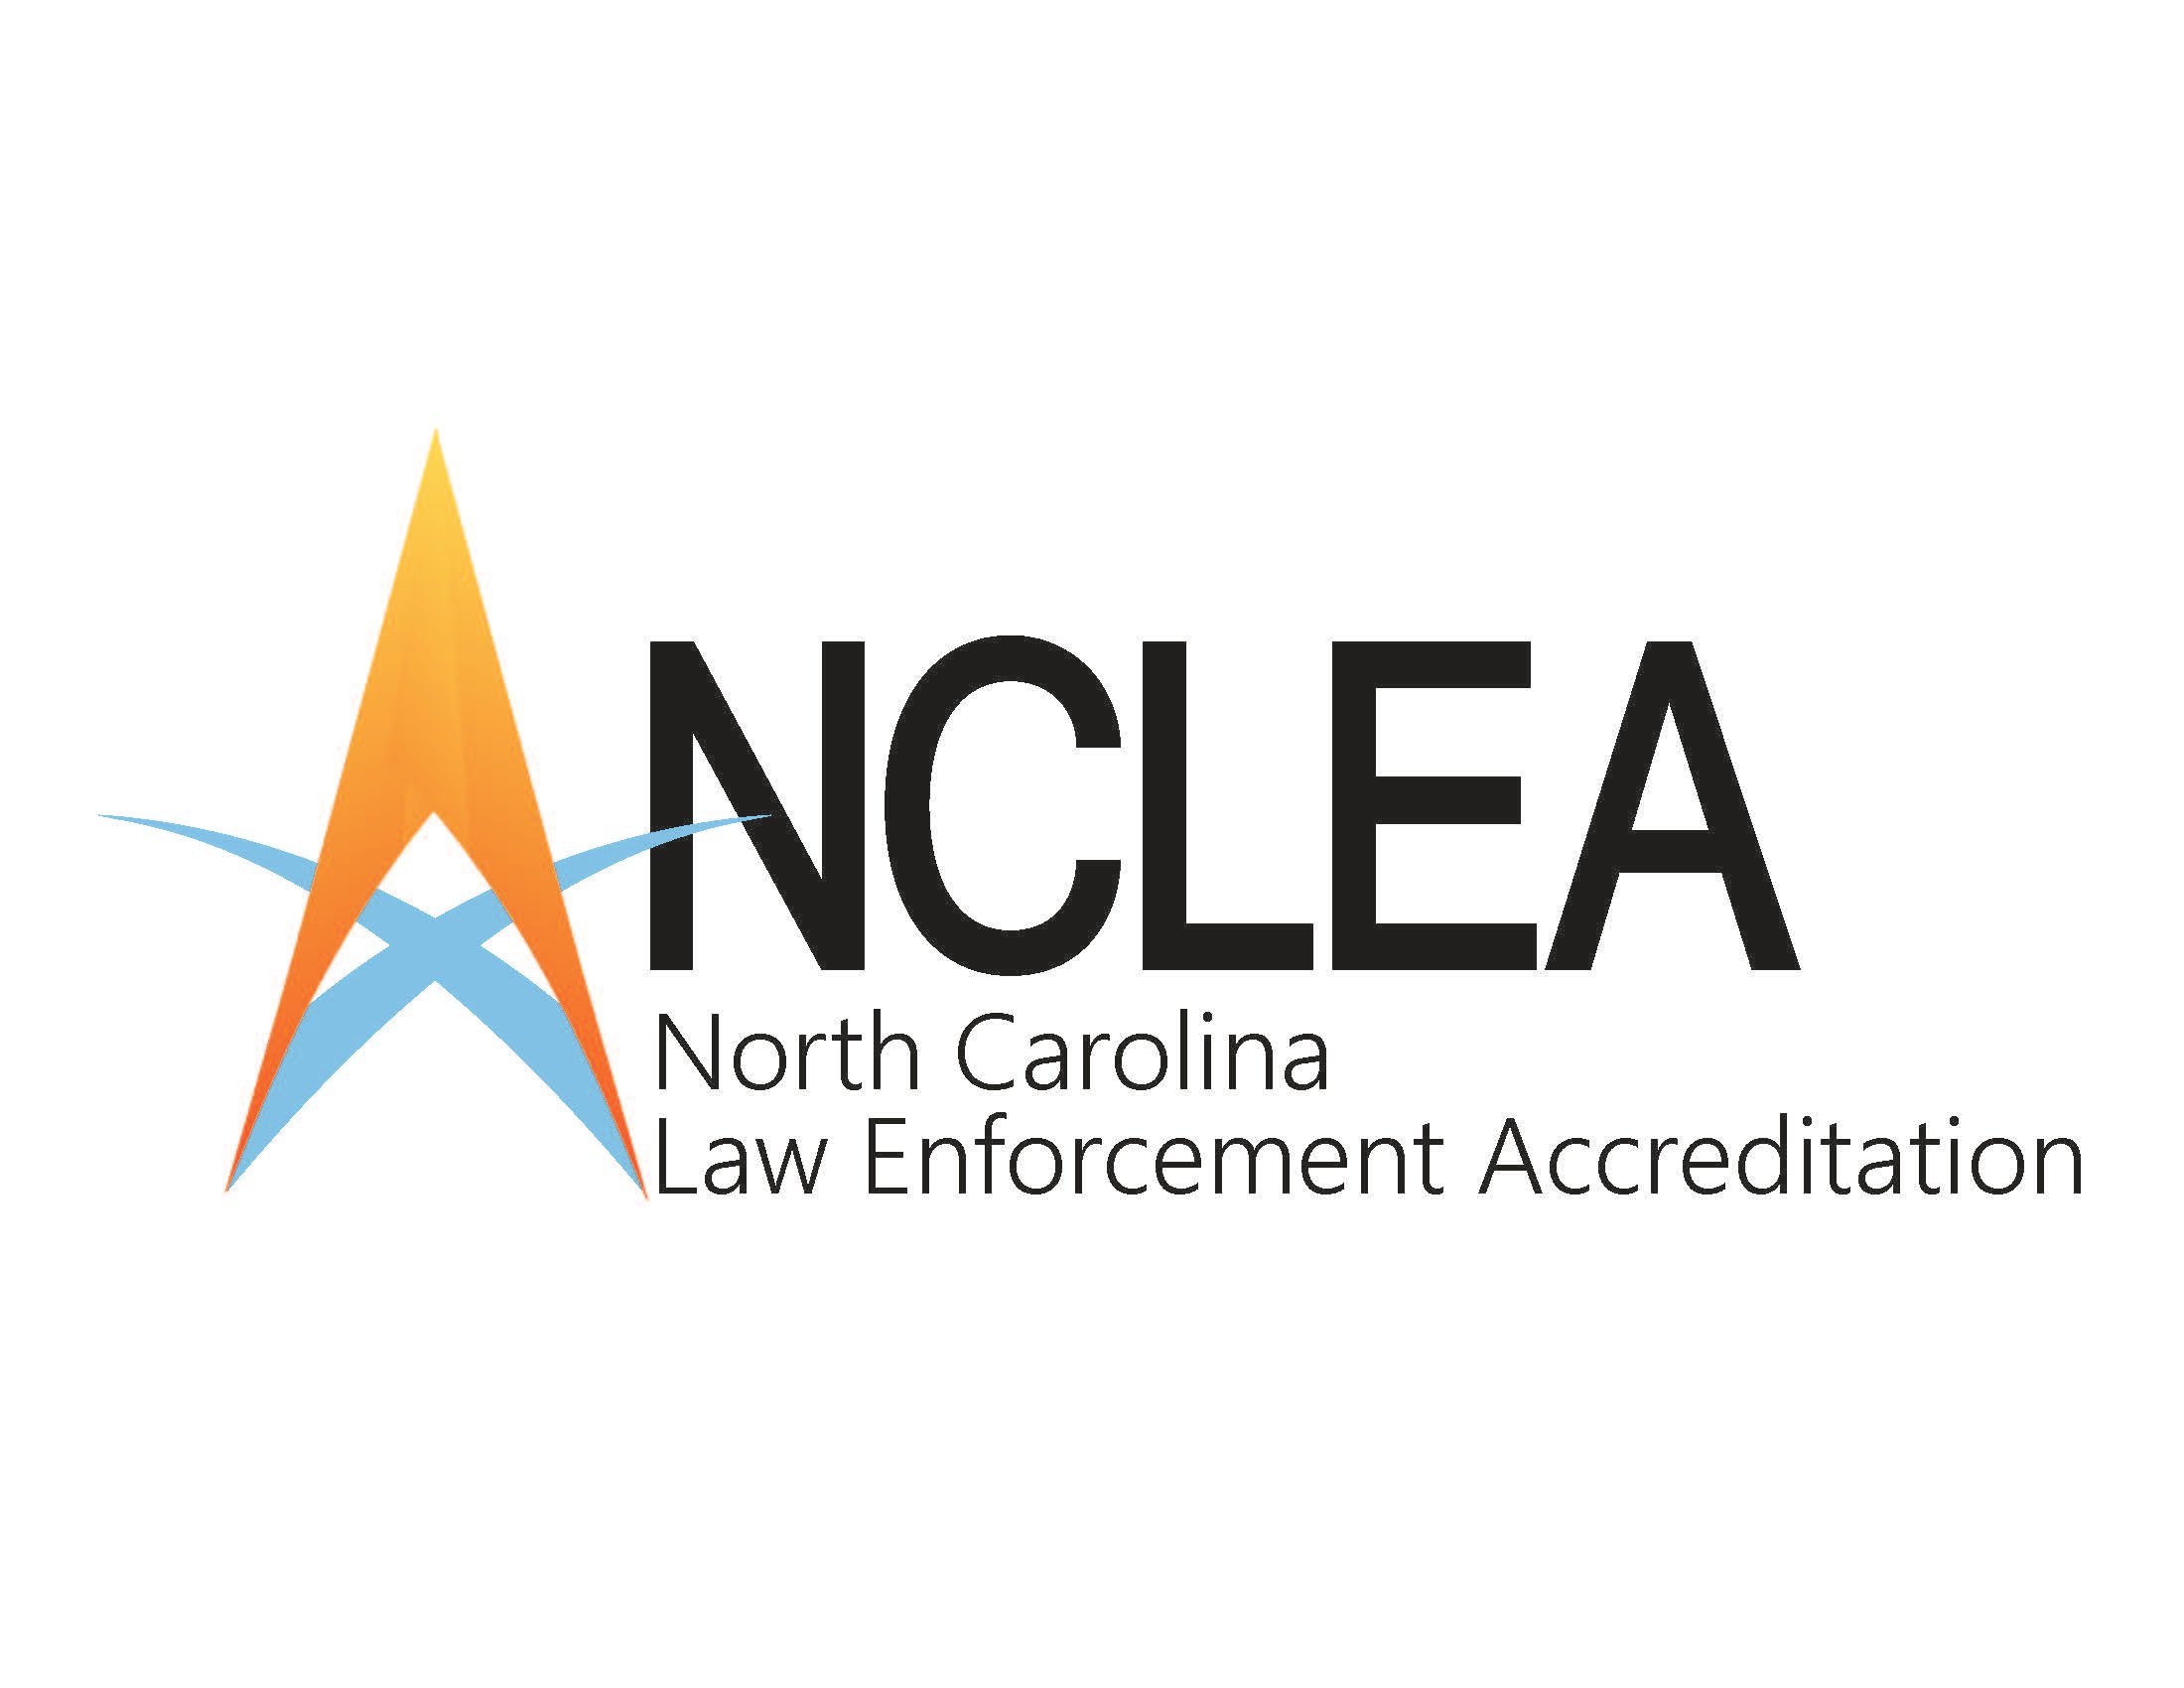 The North Carolina Law Enforcement Accreditation logo